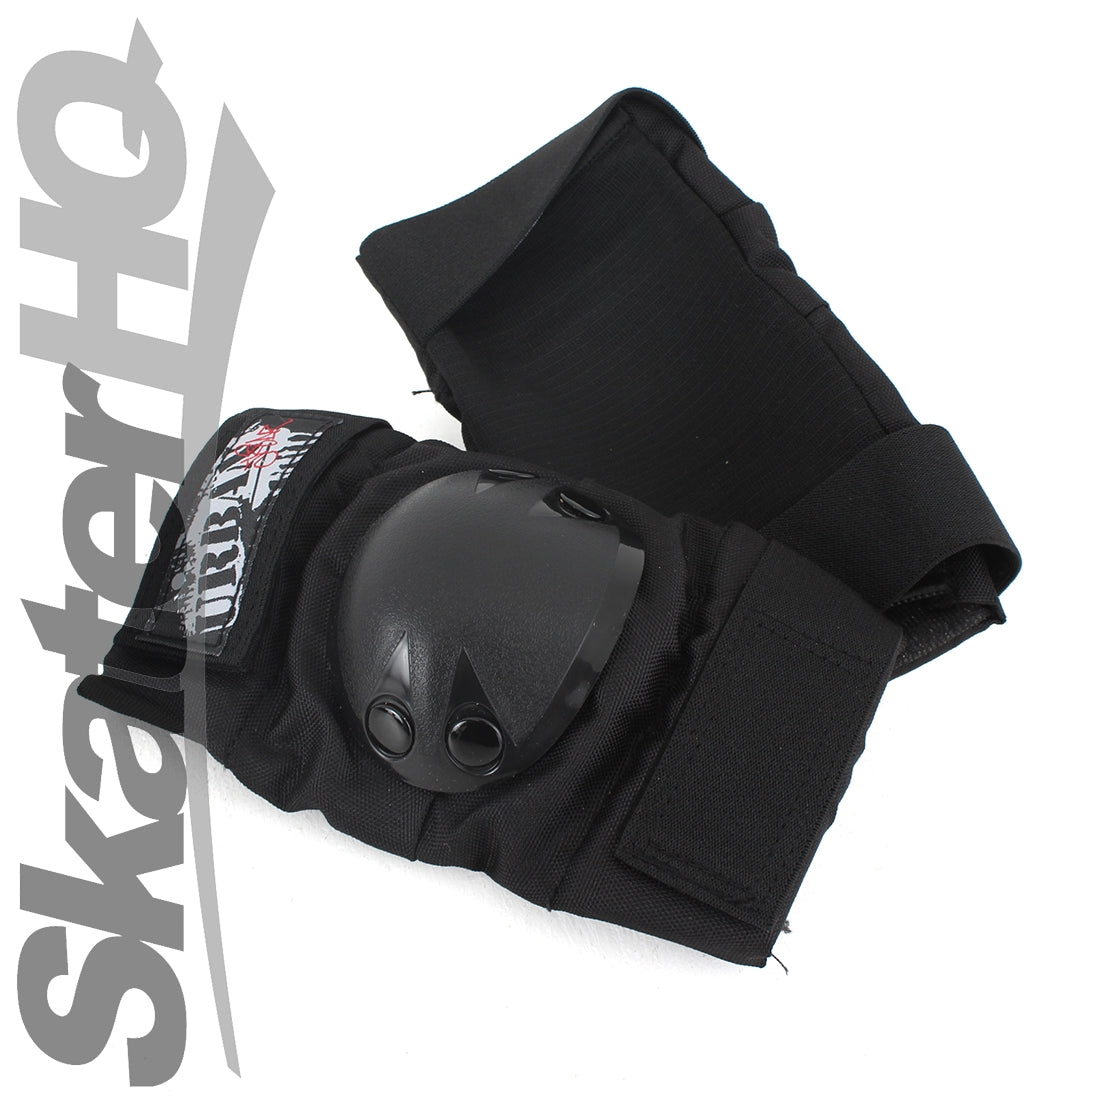 Urban Skater Tri Pack Black - Junior Protective Gear